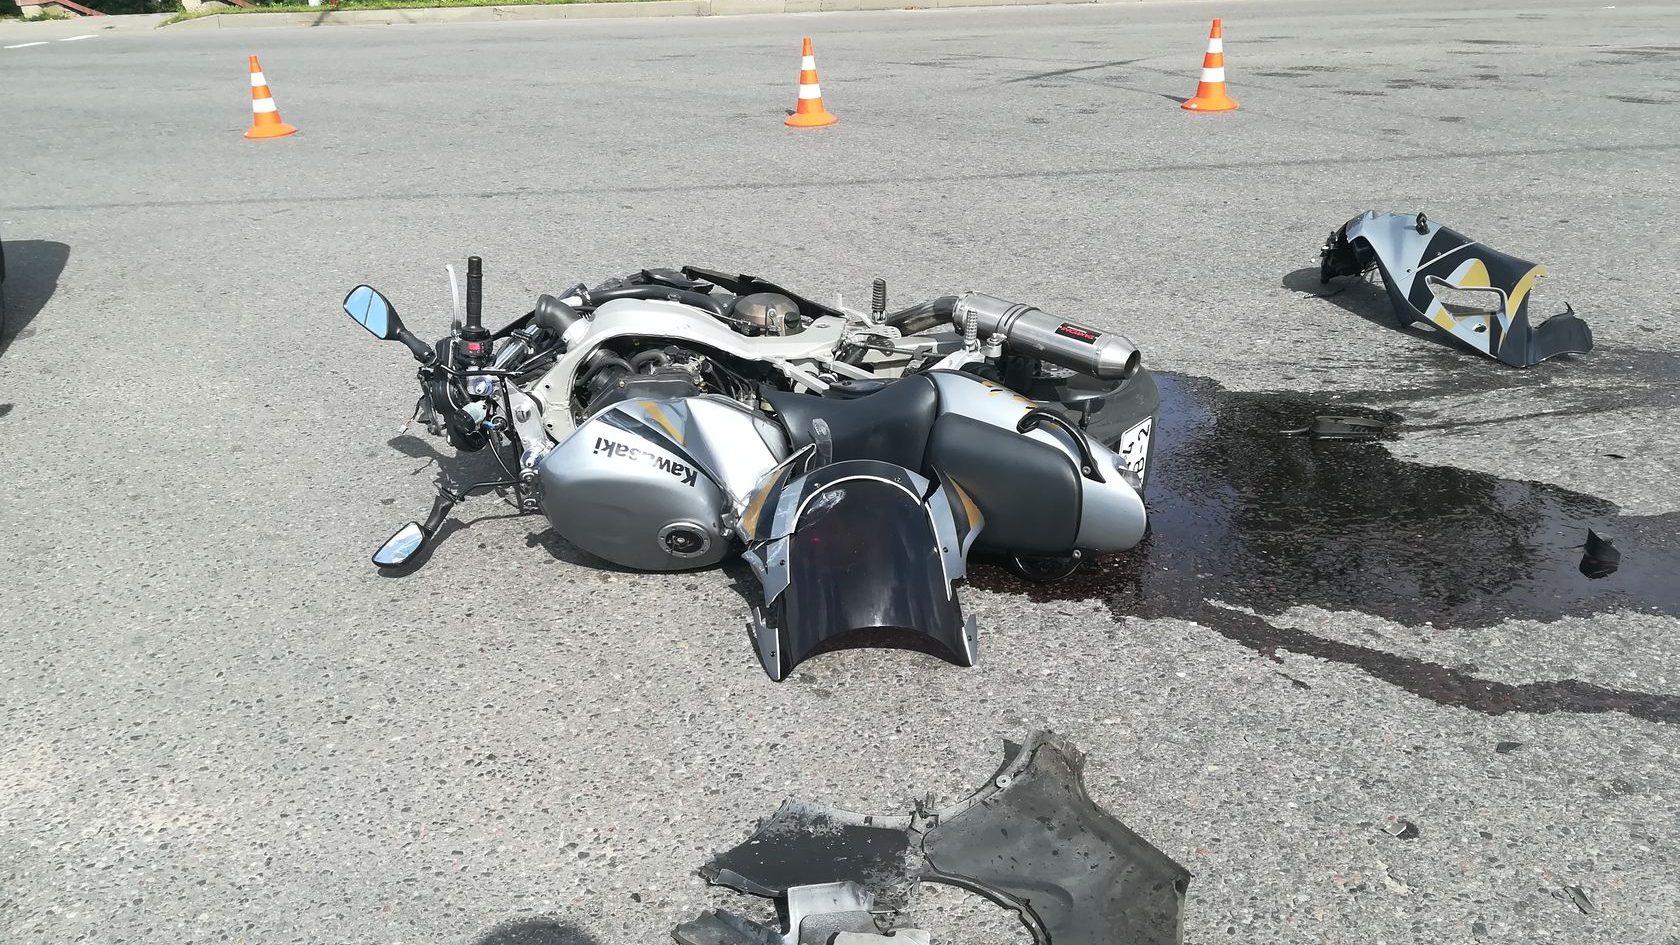 Мотоцикл после аварии. Разбитый белый мотоцикл.